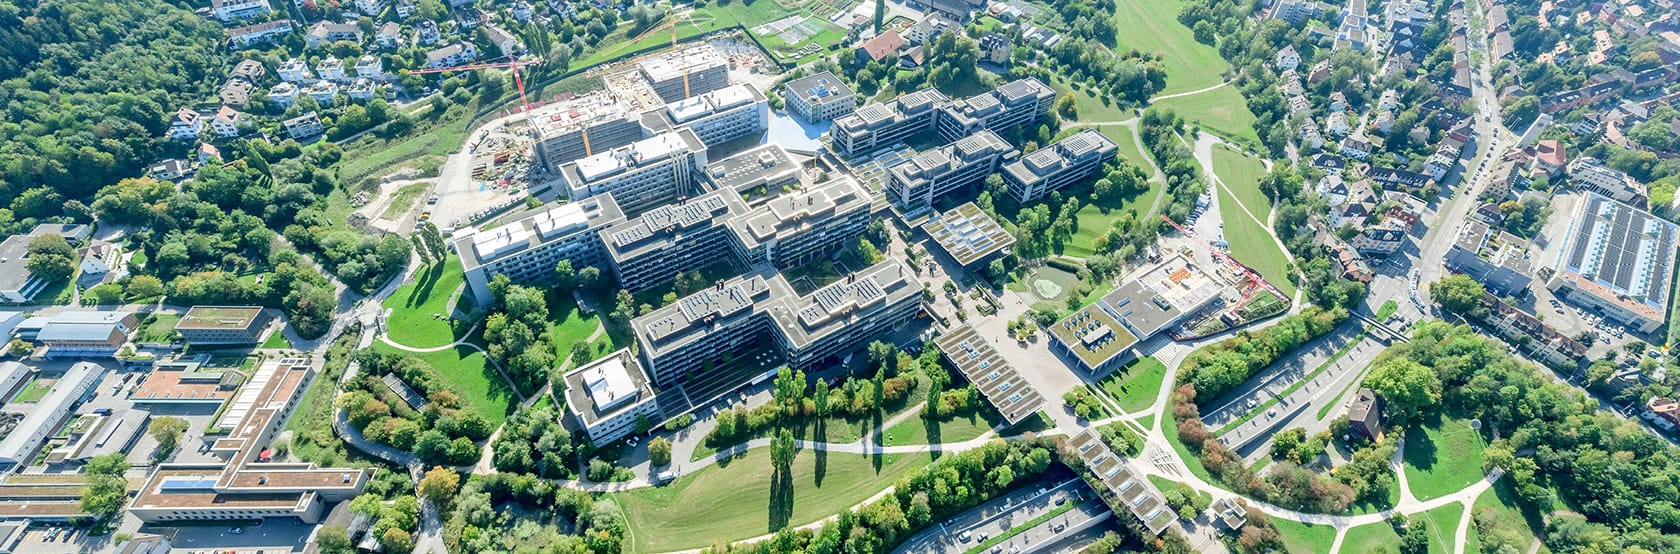 bird eye view of the Irchel Campus of the university of zurich